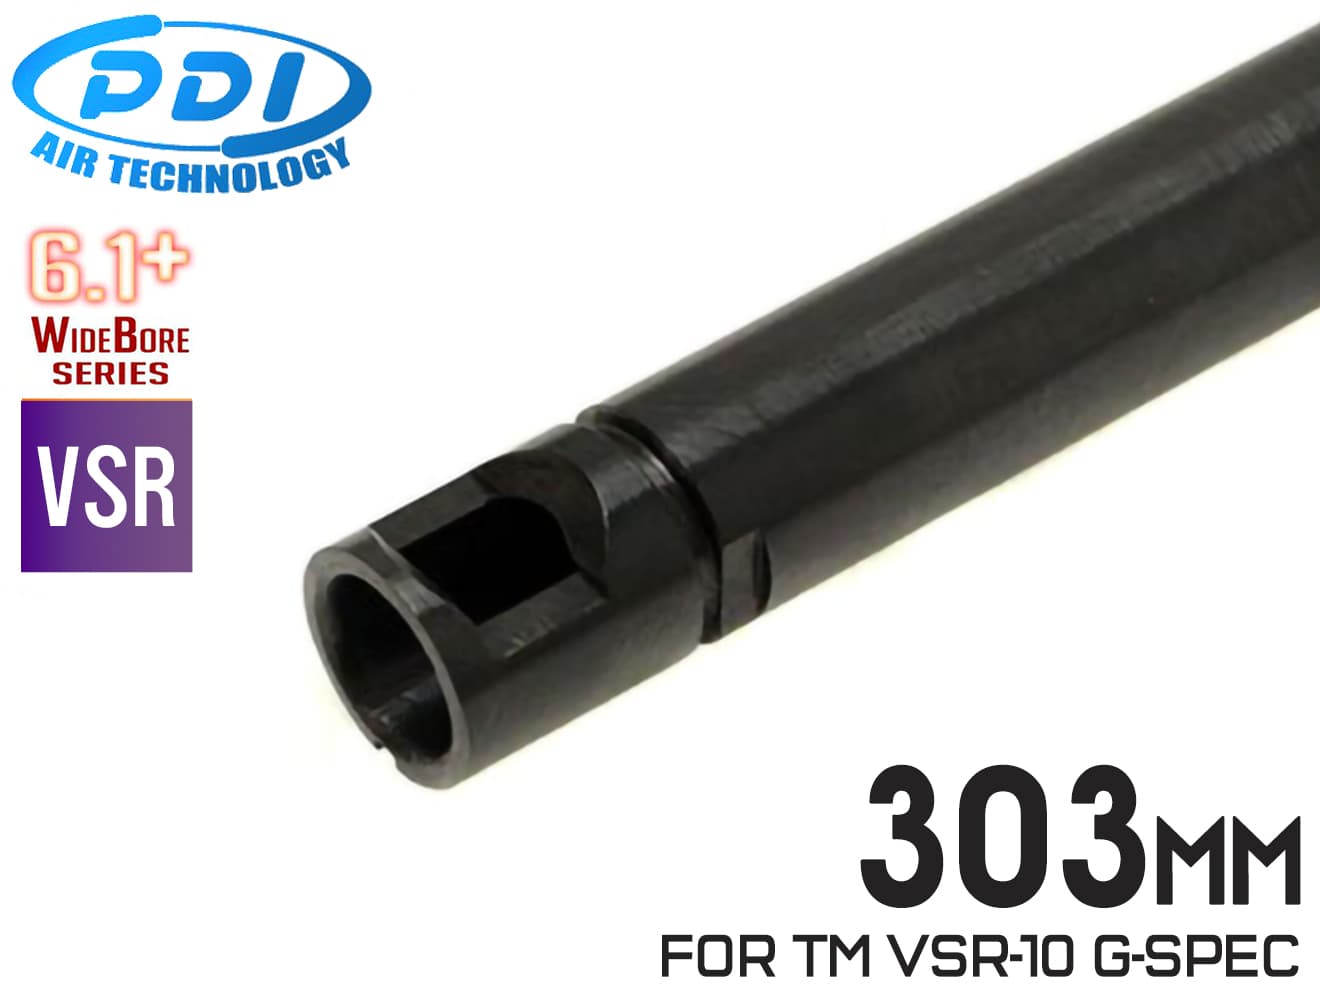 PDI WIDEBOREシリーズ 6.1 VSR/L96 ルーズ インナーバレル(6.1±0.007mm) 303mm Gスペック◆MARUI エアコキ ライフル スナイパー HOP 流速 ショートバレル化